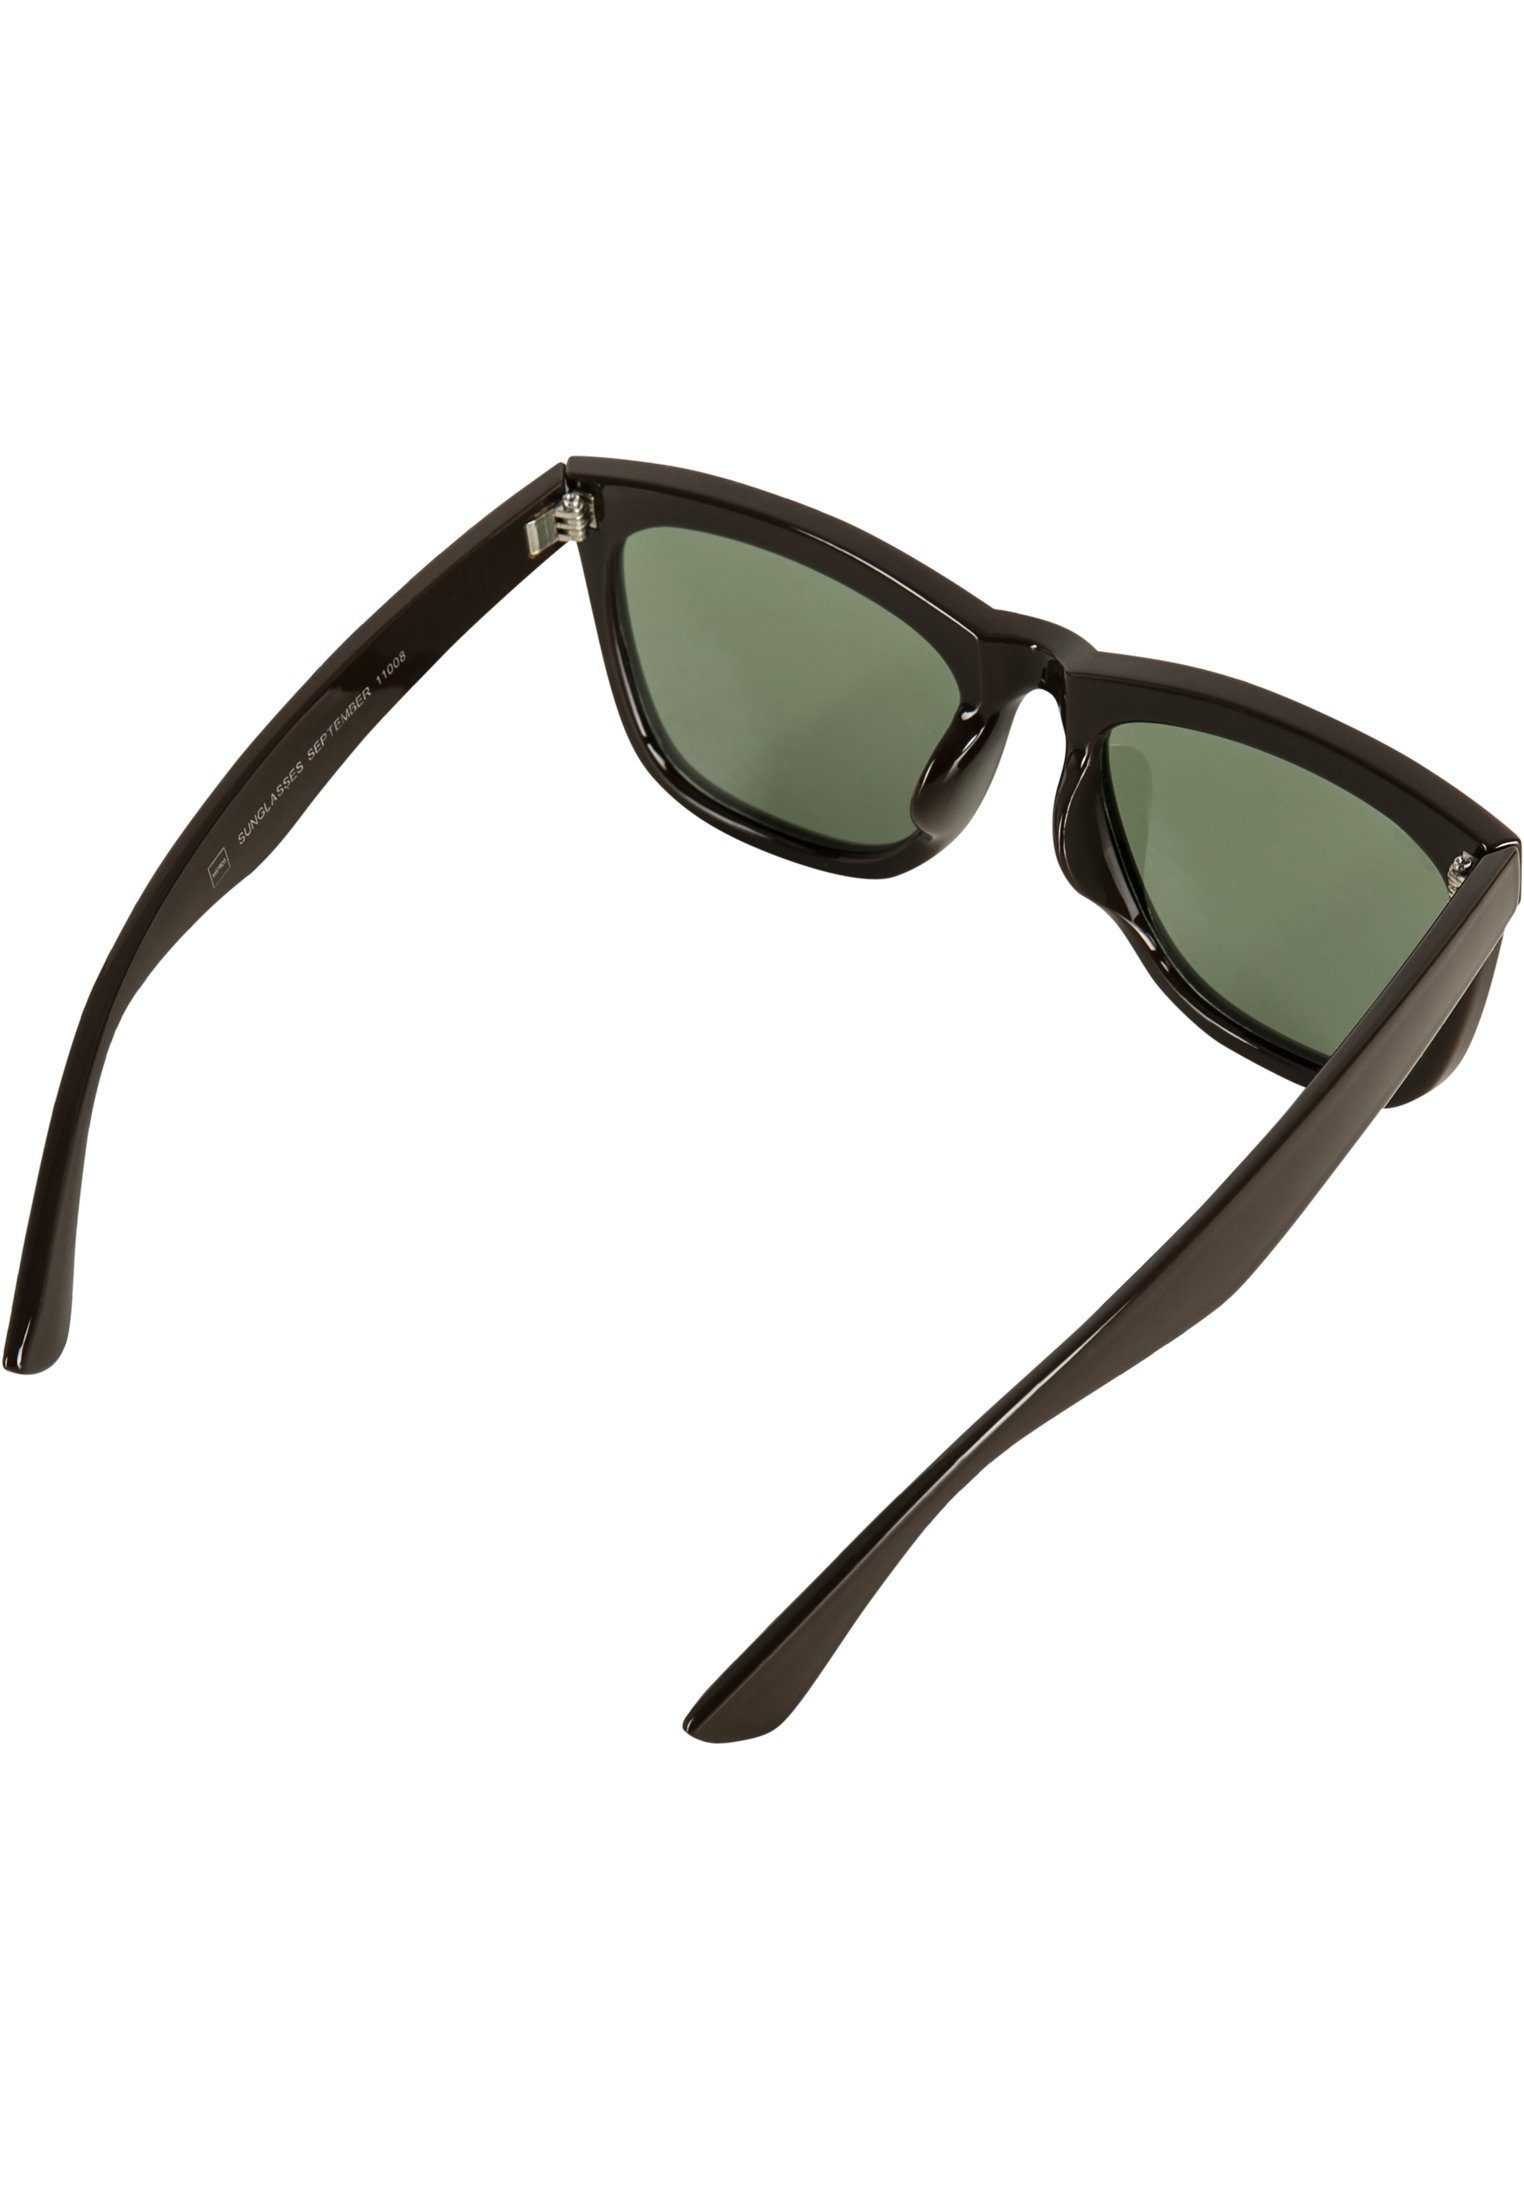 Sunglasses September Sonnenbrille brown/green Accessoires MSTRDS